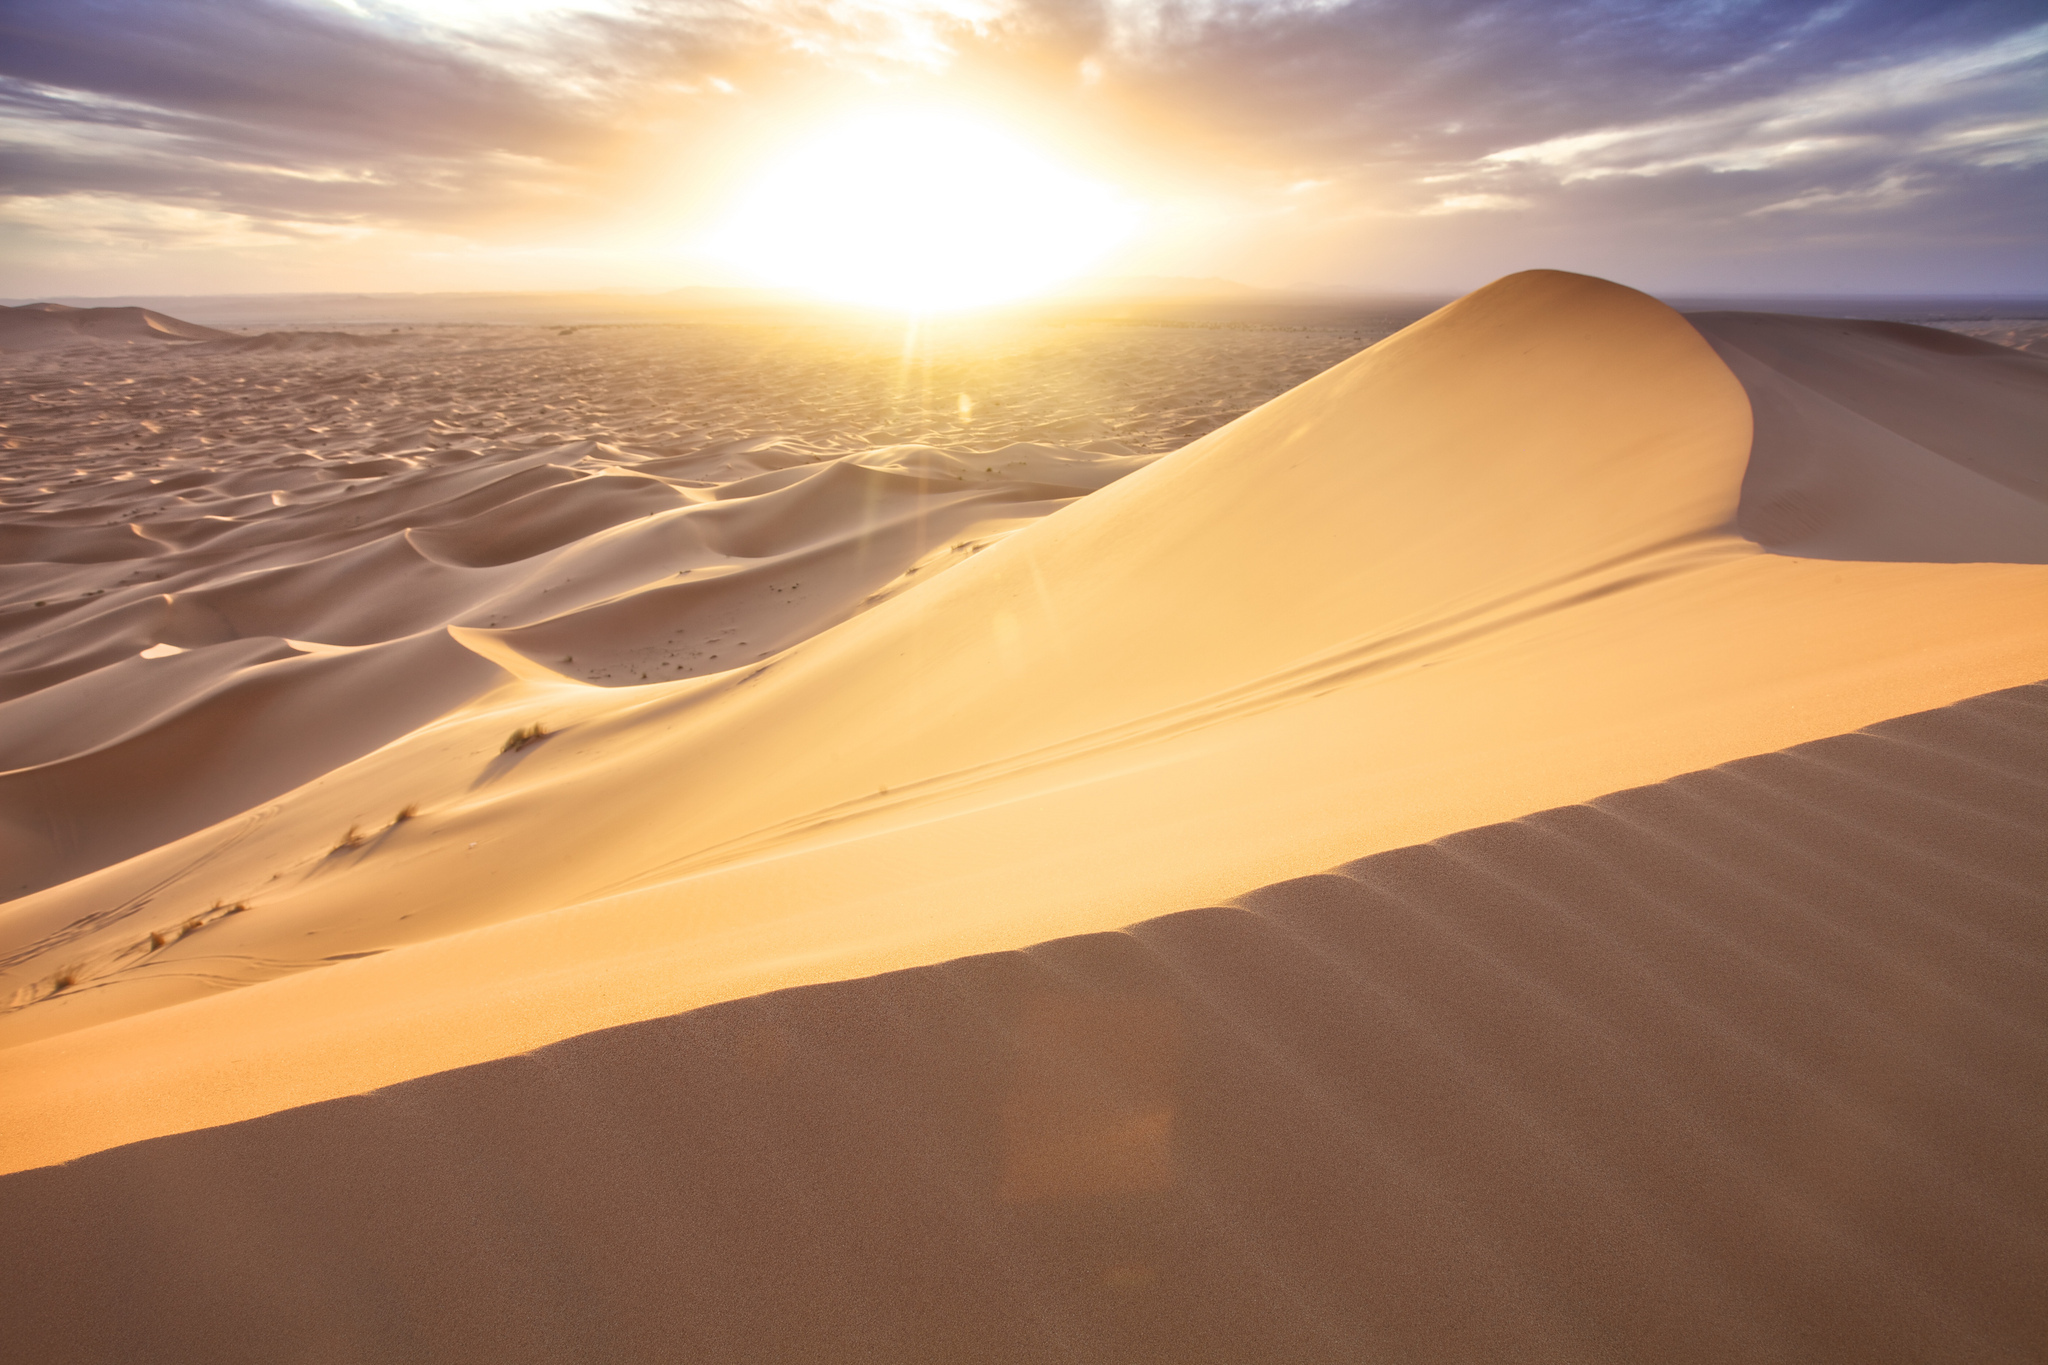 Desert Sand Dunes Best Wallpaper Image C2nbux1y1c